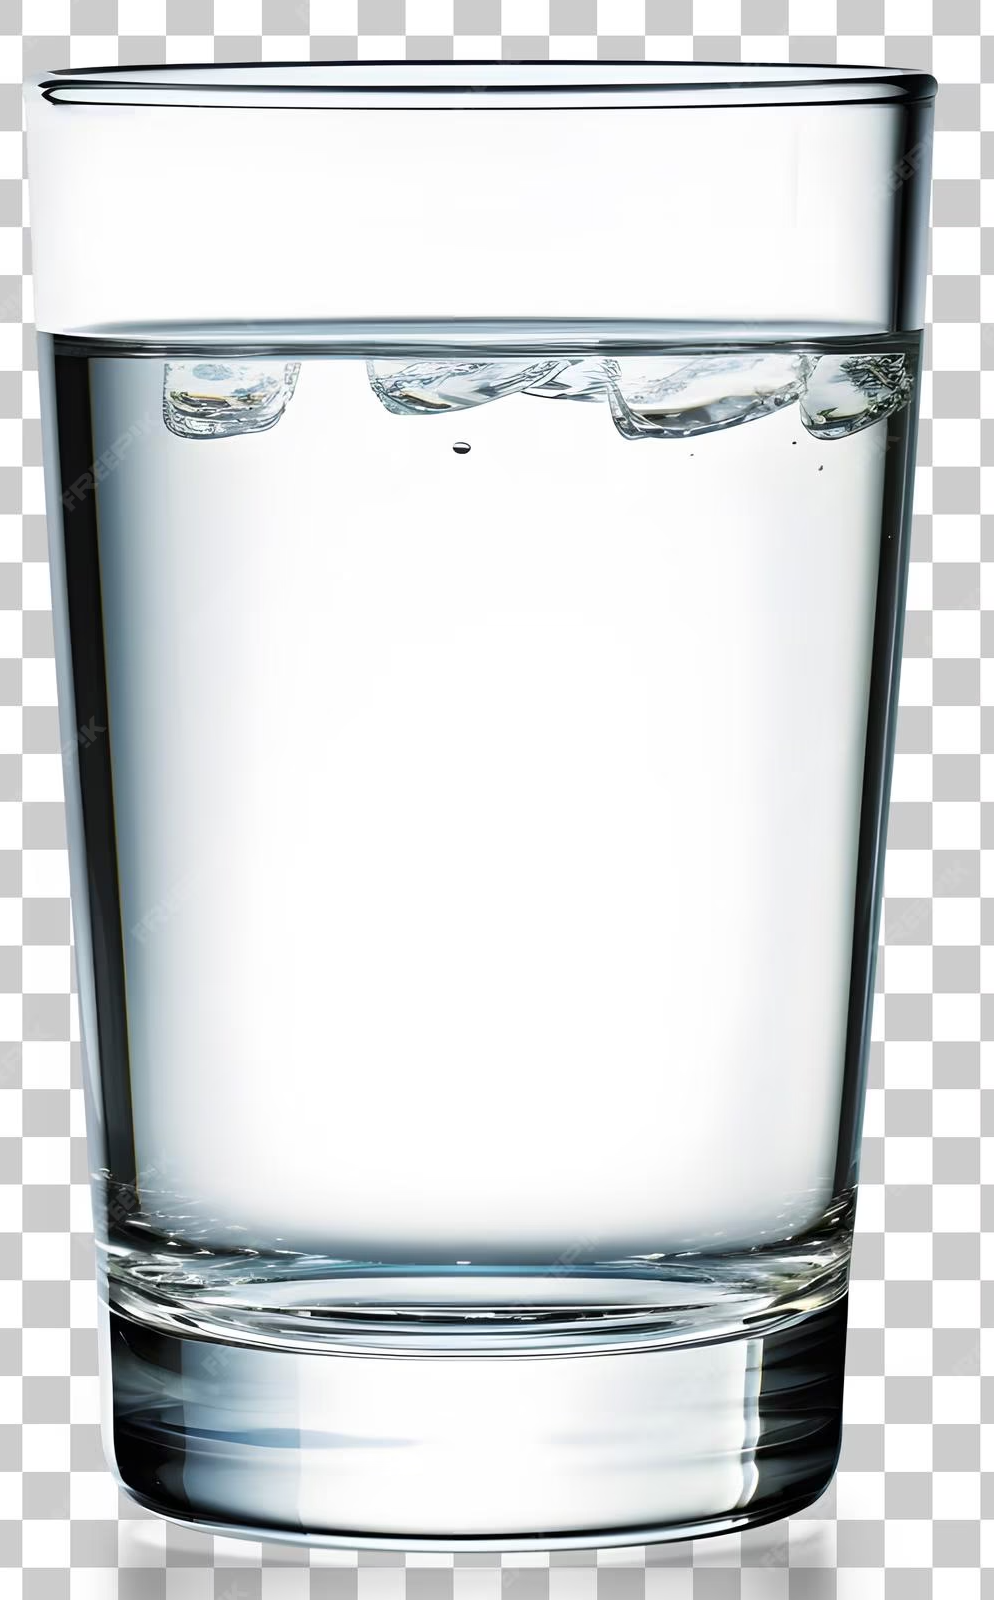 Cup of Water Blank Meme Template